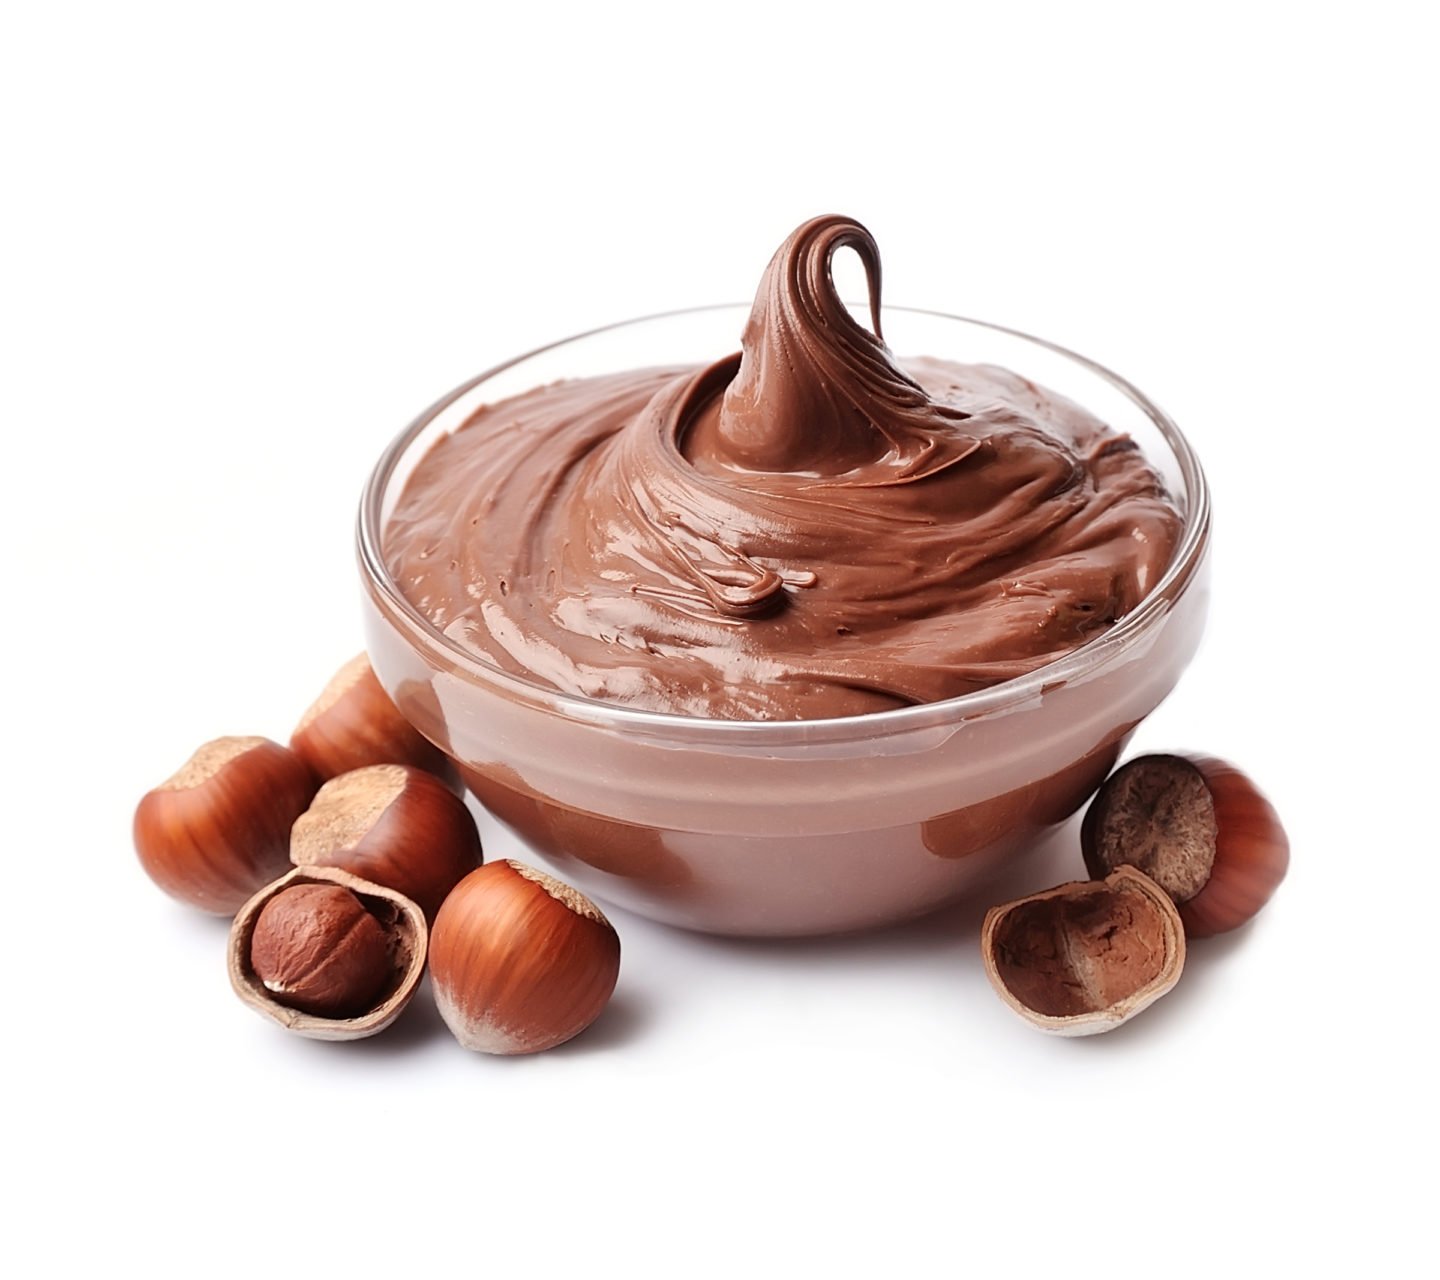 Nutella hazelnut spread as cocoa powder substitute